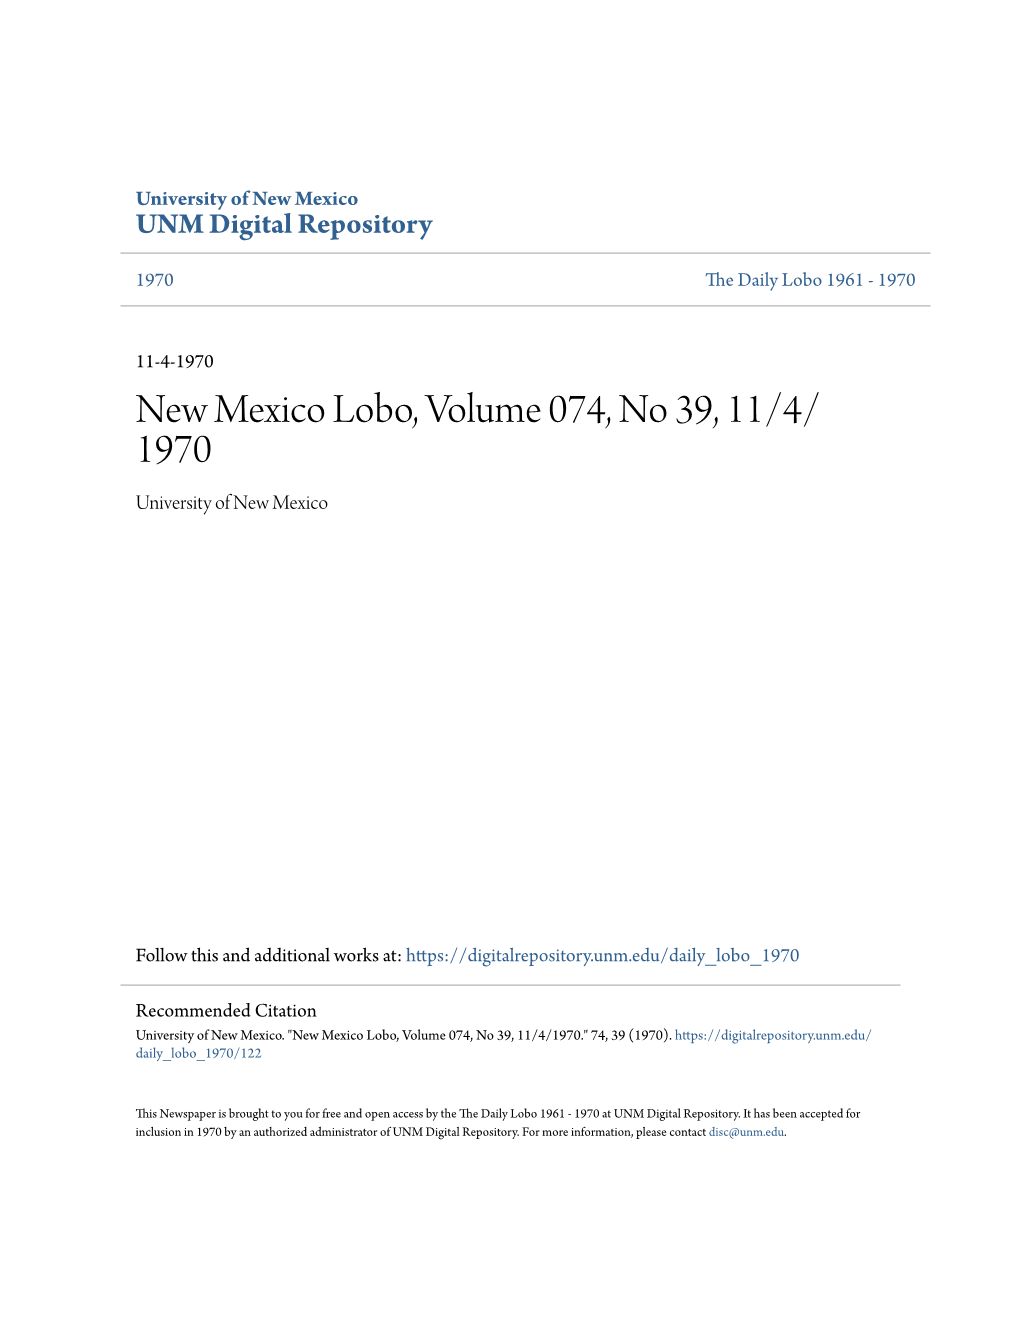 New Mexico Lobo, Volume 074, No 39, 11/4/1970." 74, 39 (1970)